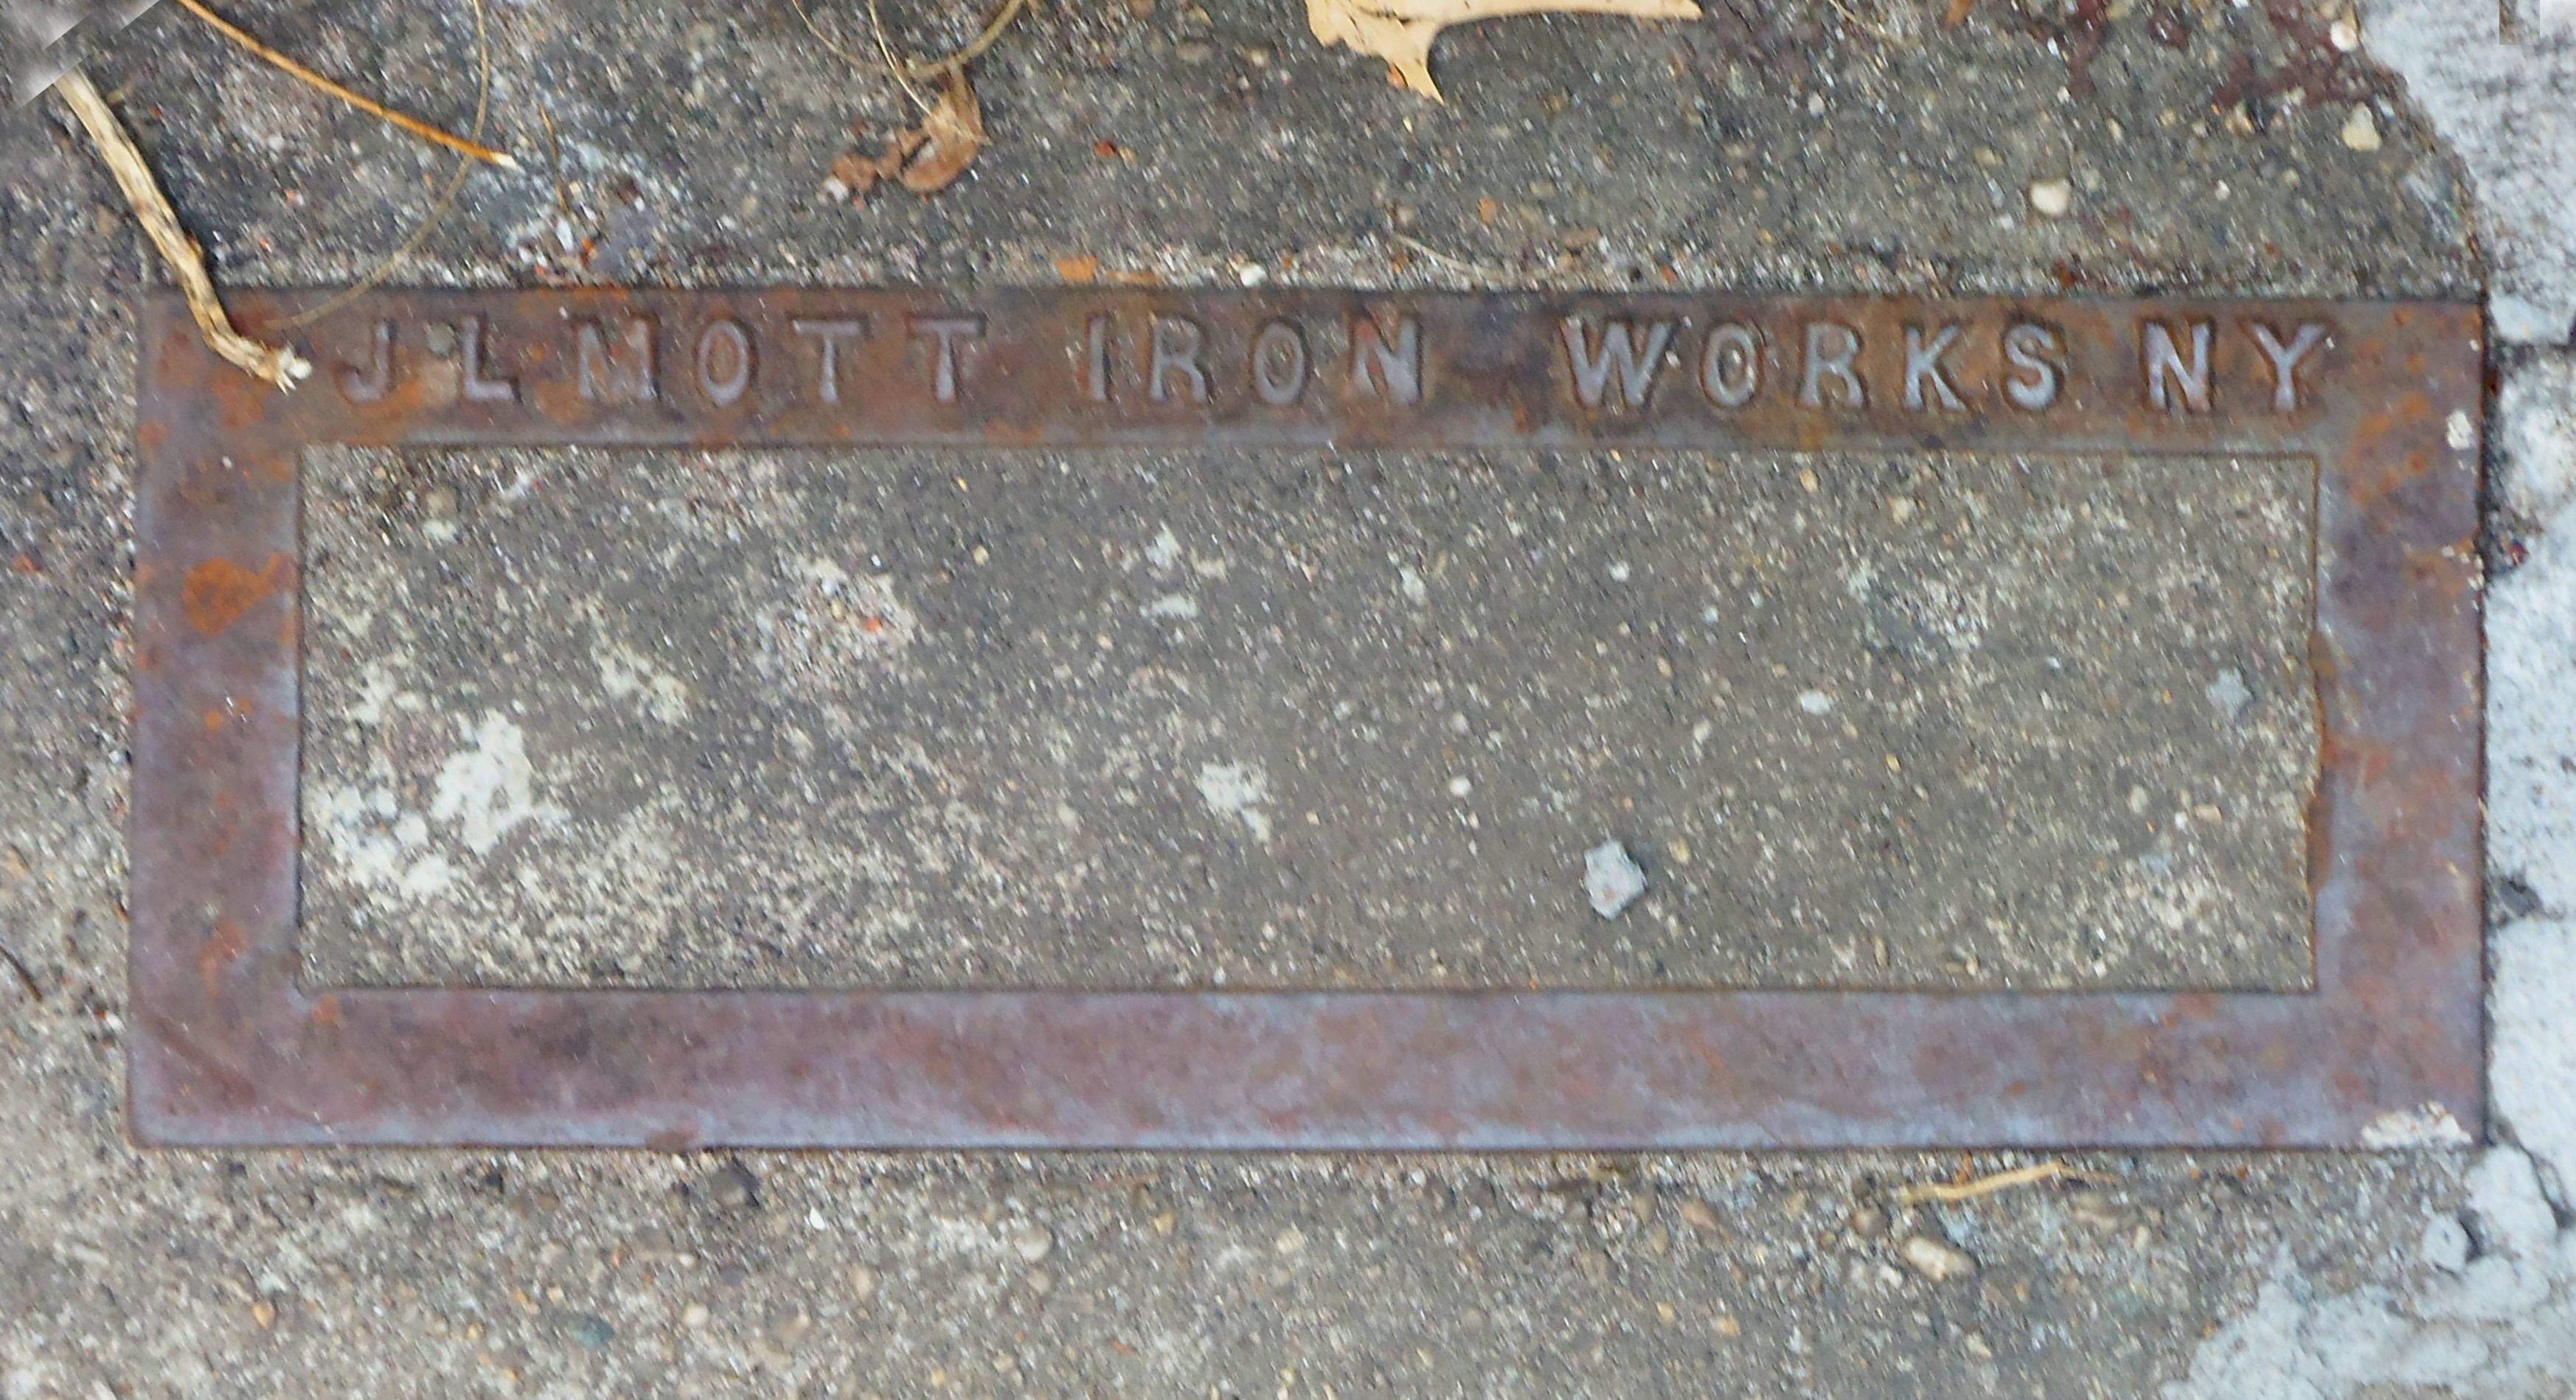 J.L. Mott Iron Works building drain cover